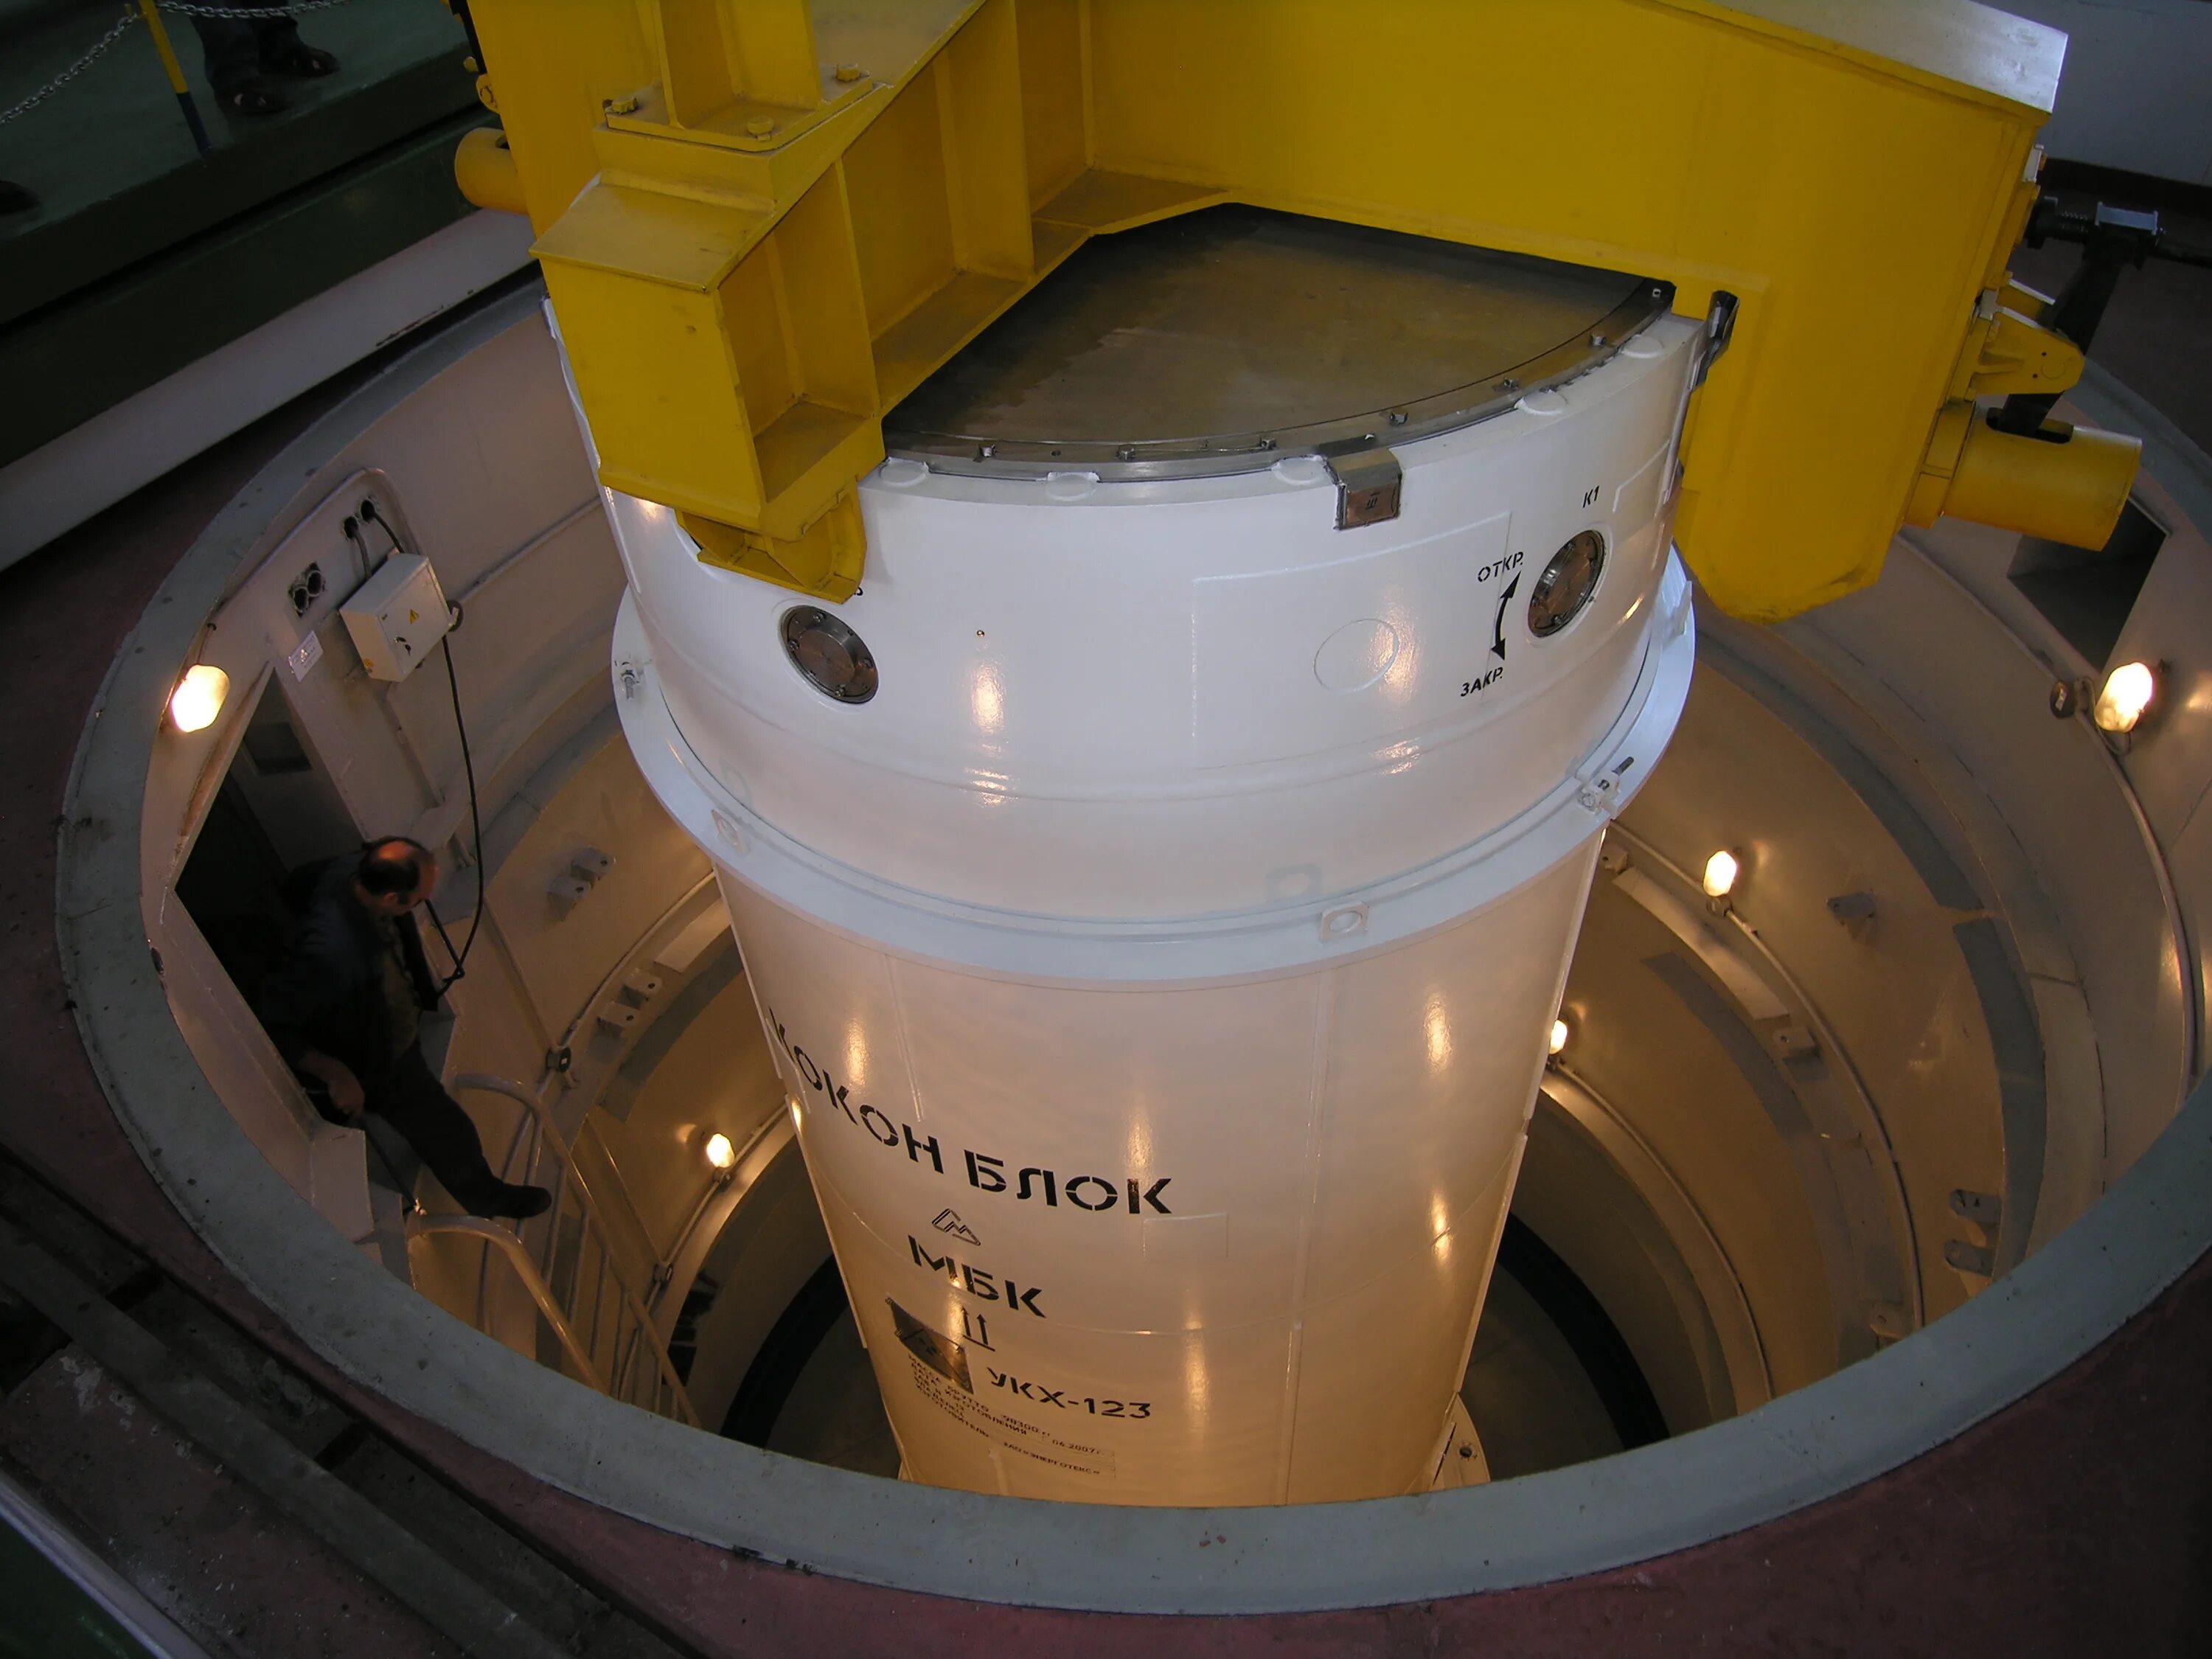 Пг н. БН-350 реактор. Опреснители БН-350. Цилиндр низкого давления БН-800. УКХ 109 контейнер.